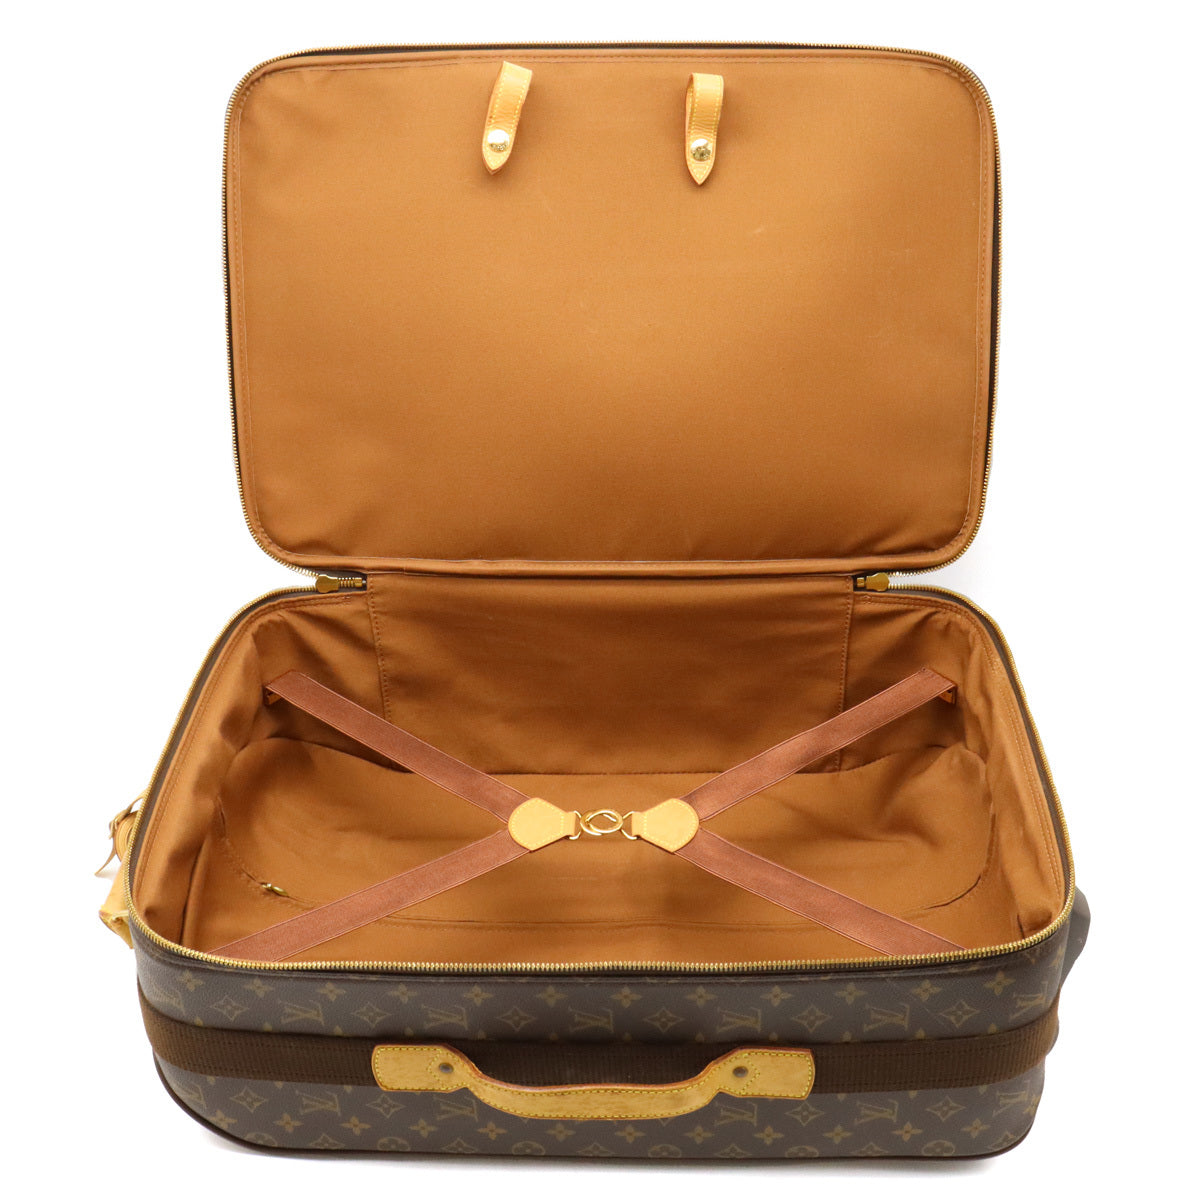 Louis Vuitton Monogram Canvas Pegas 55 Carry On Rolling Suitcase